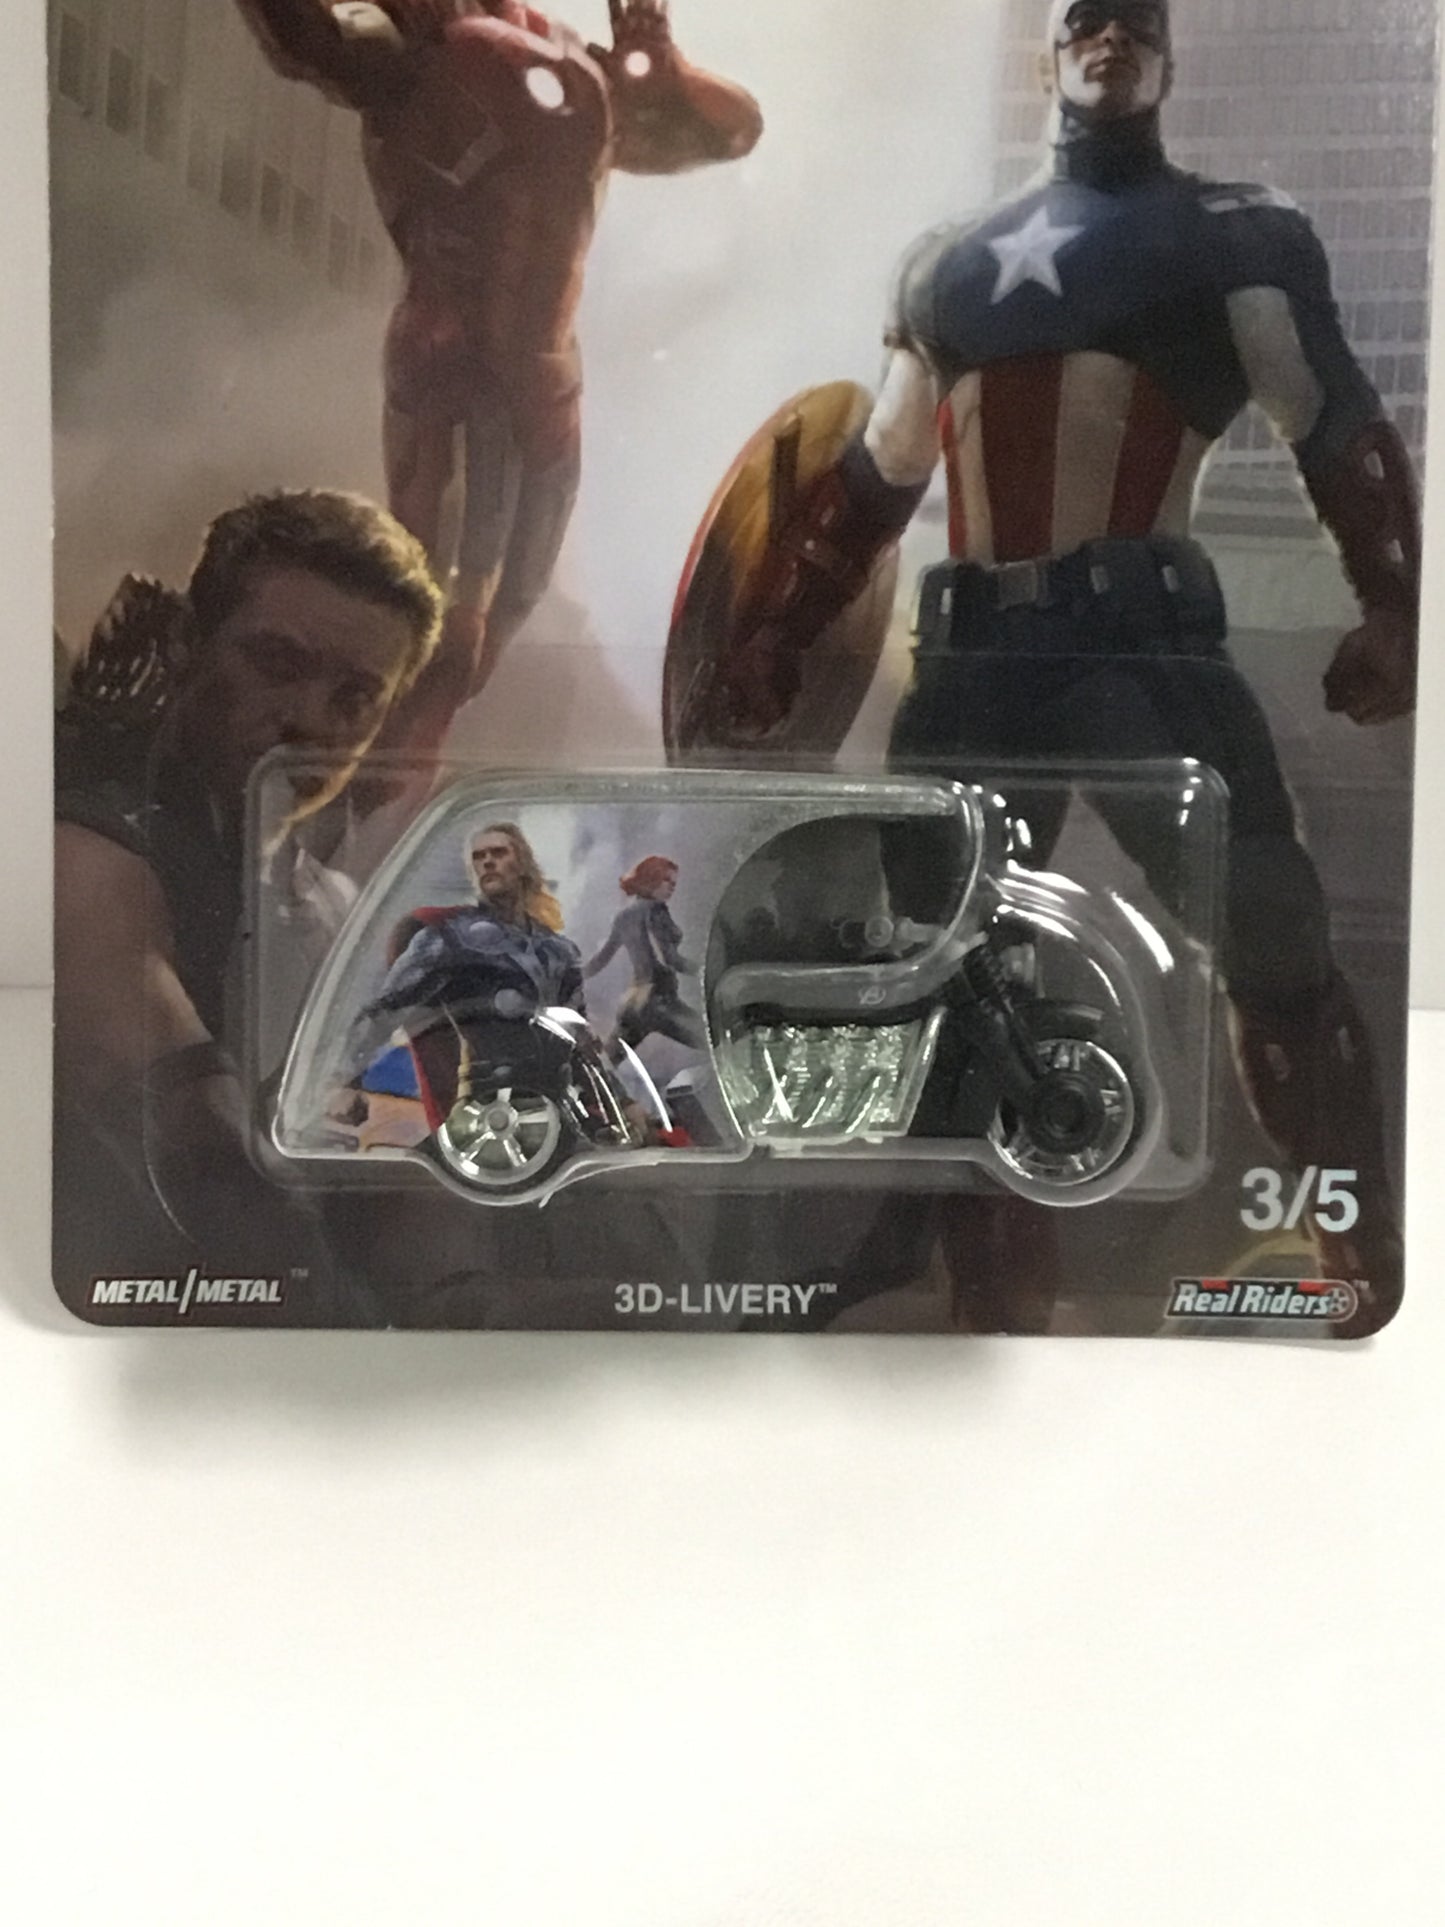 Hot wheels pop culture marvel studios Avengers 3D-Livery F5